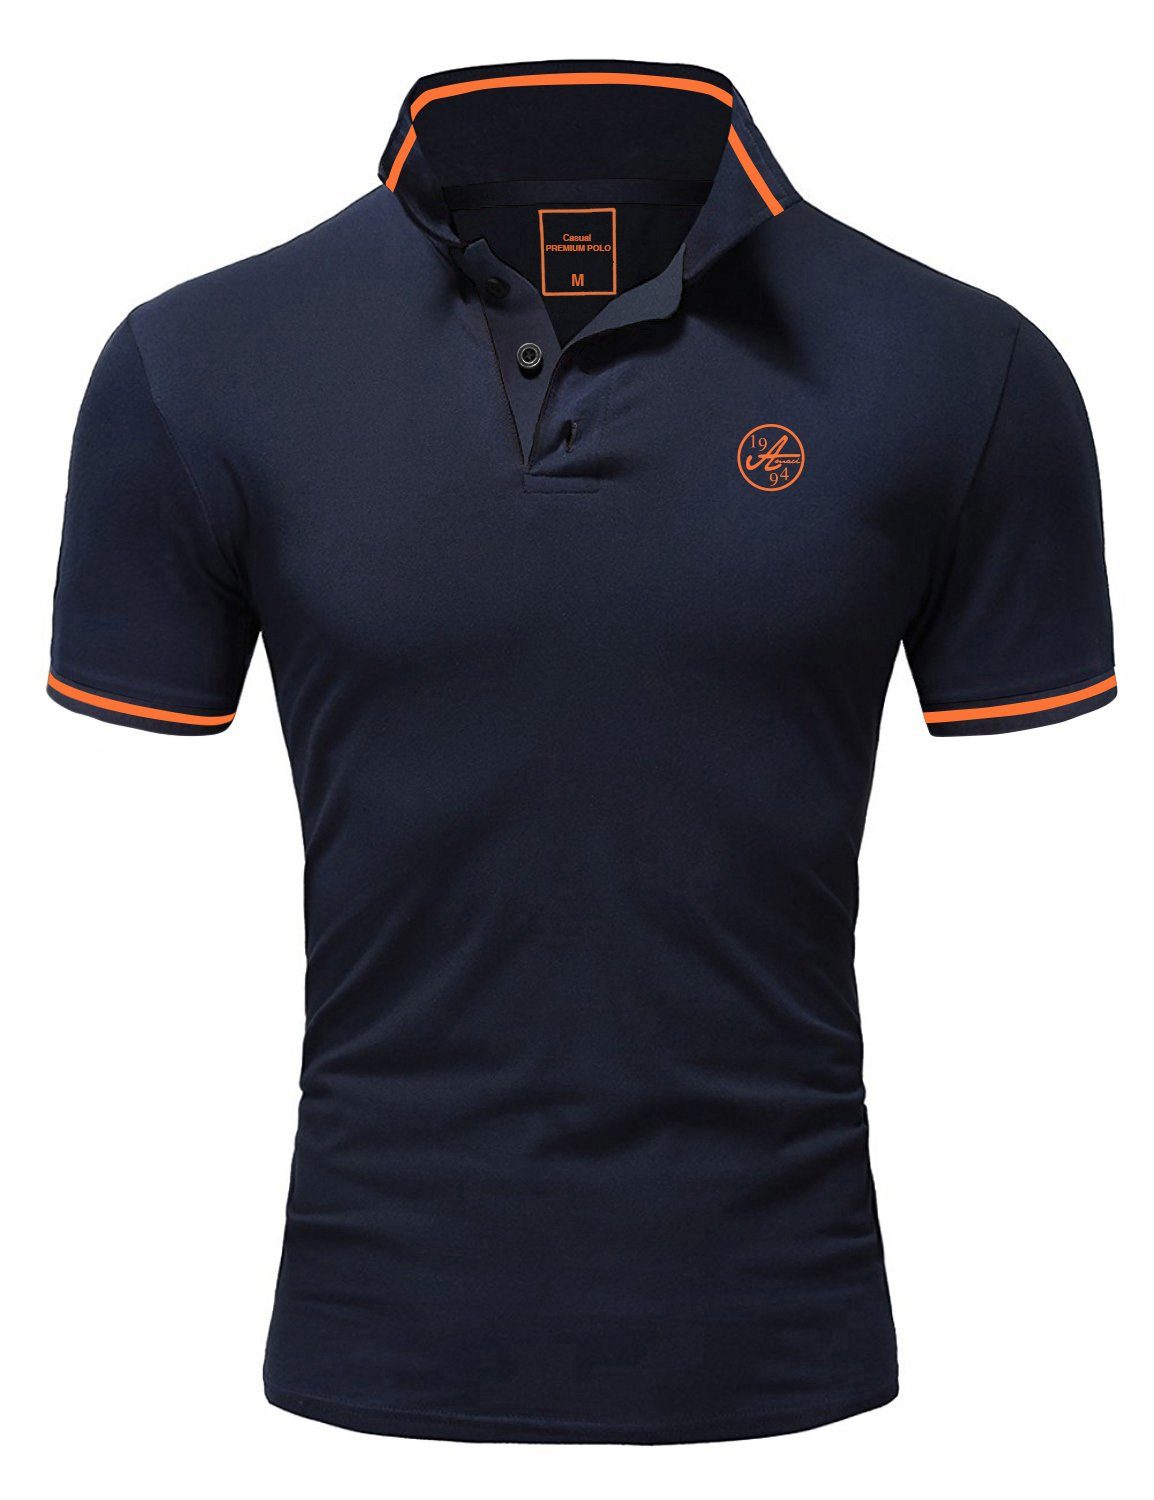 Kurzarm Basic T-Shirt Kontrast Herren Navyblau/Orange Amaci&Sons MACON Stickerei Poloshirt Polohemd